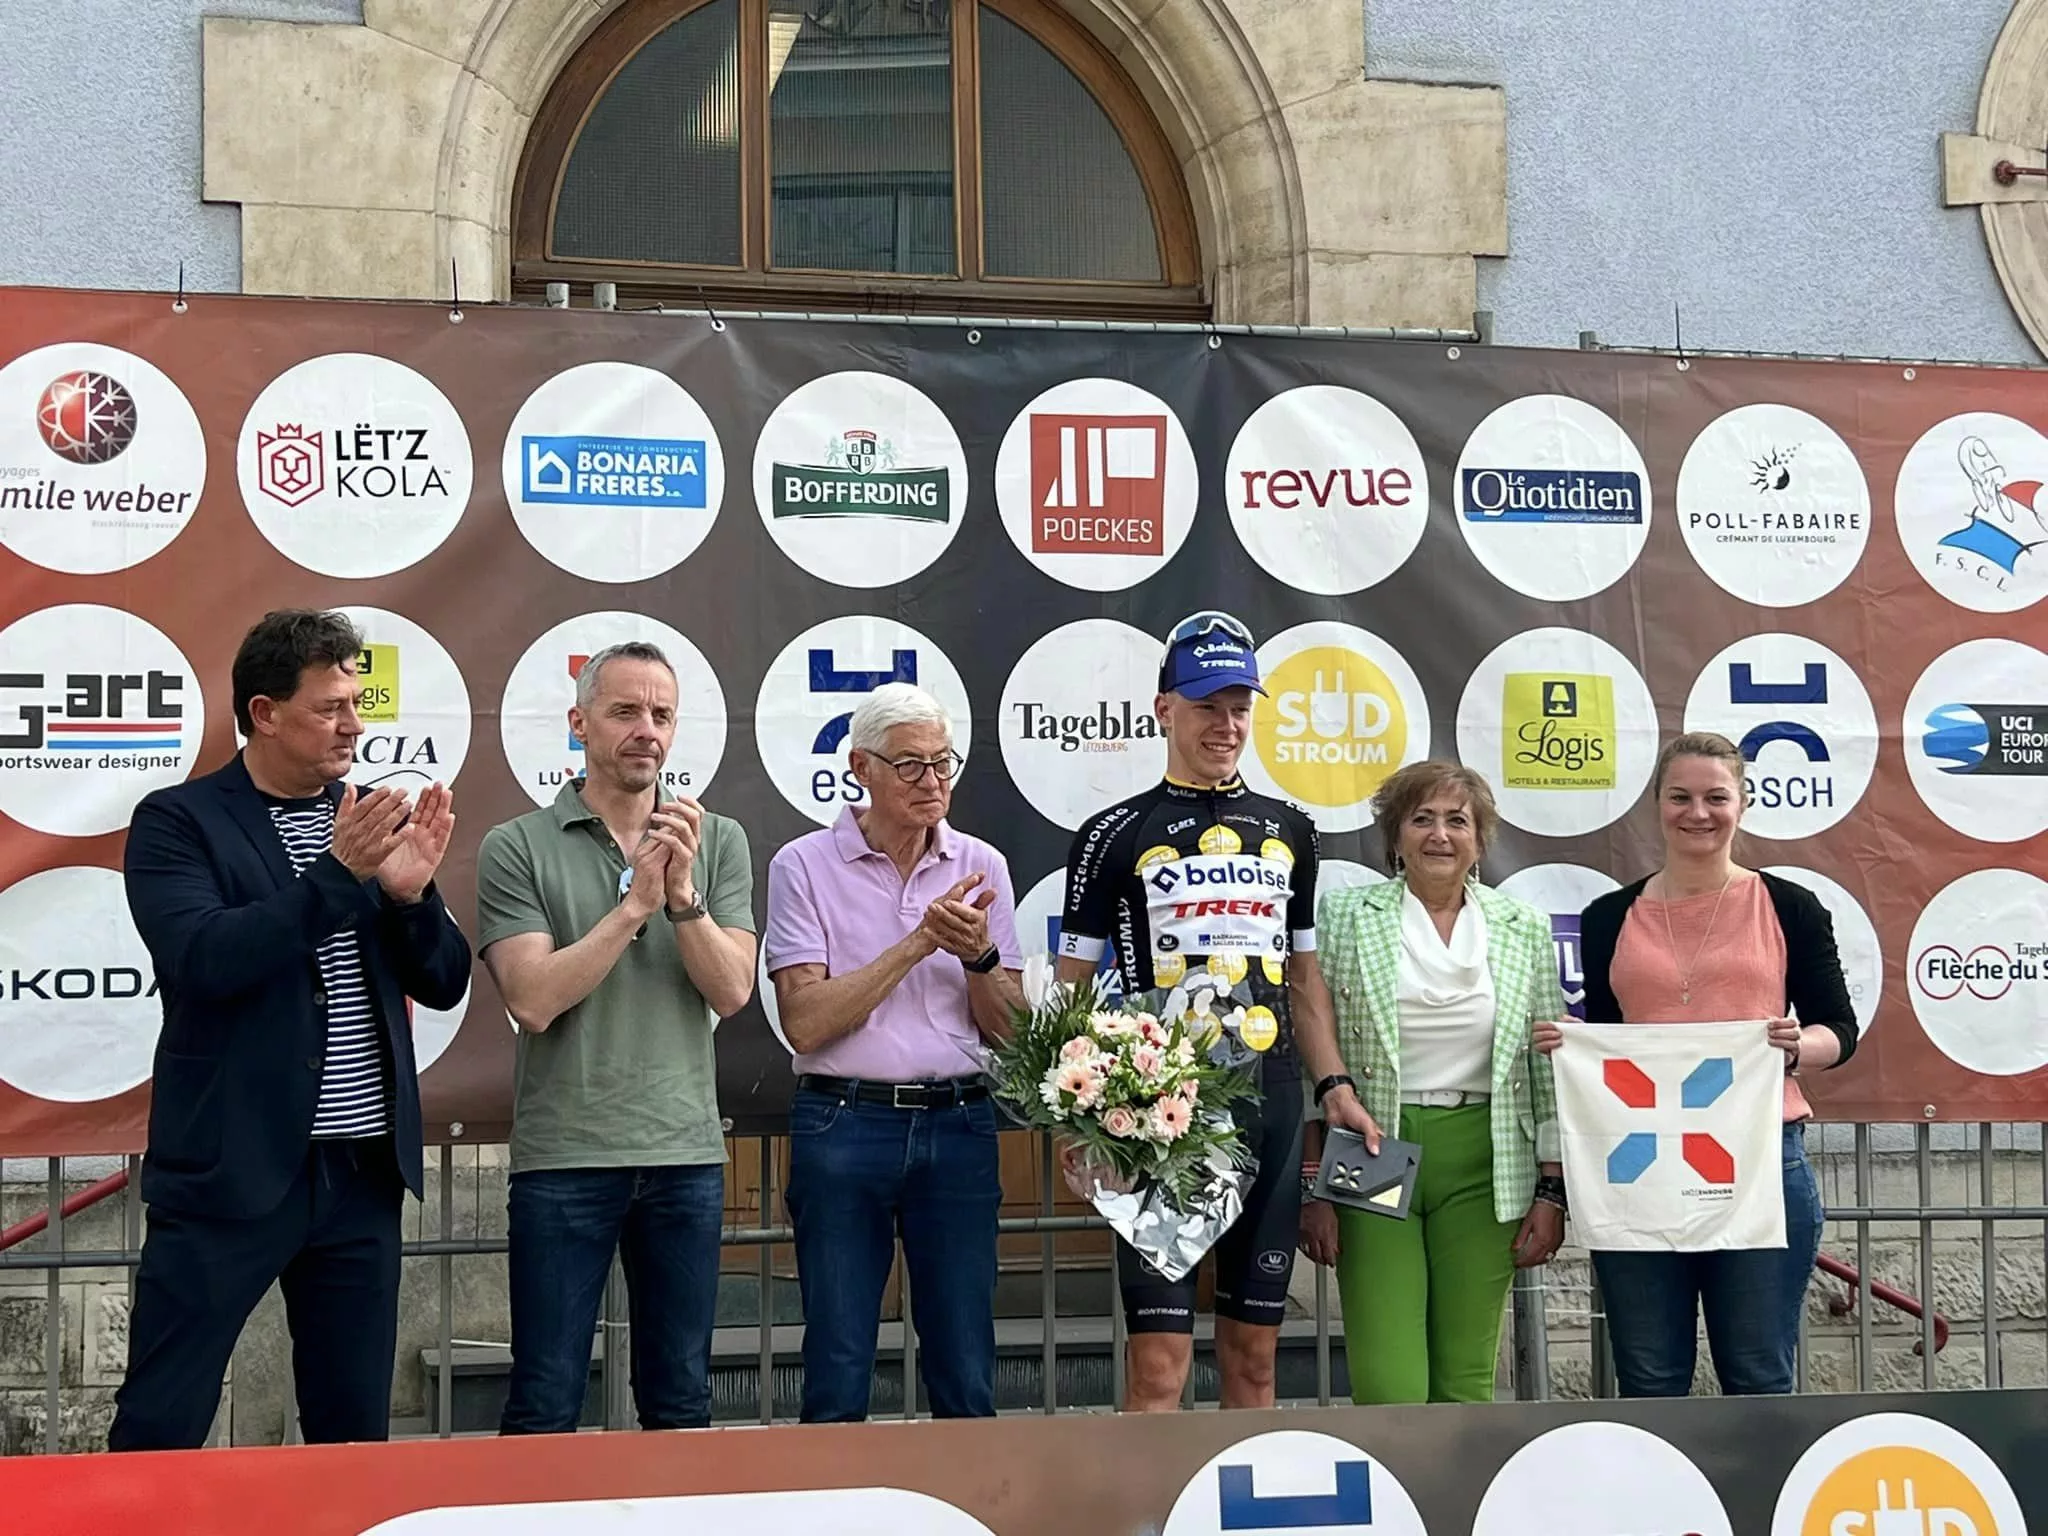 Пим Ронхаар одержал победу в велогонке «Флеш дю Сюд»